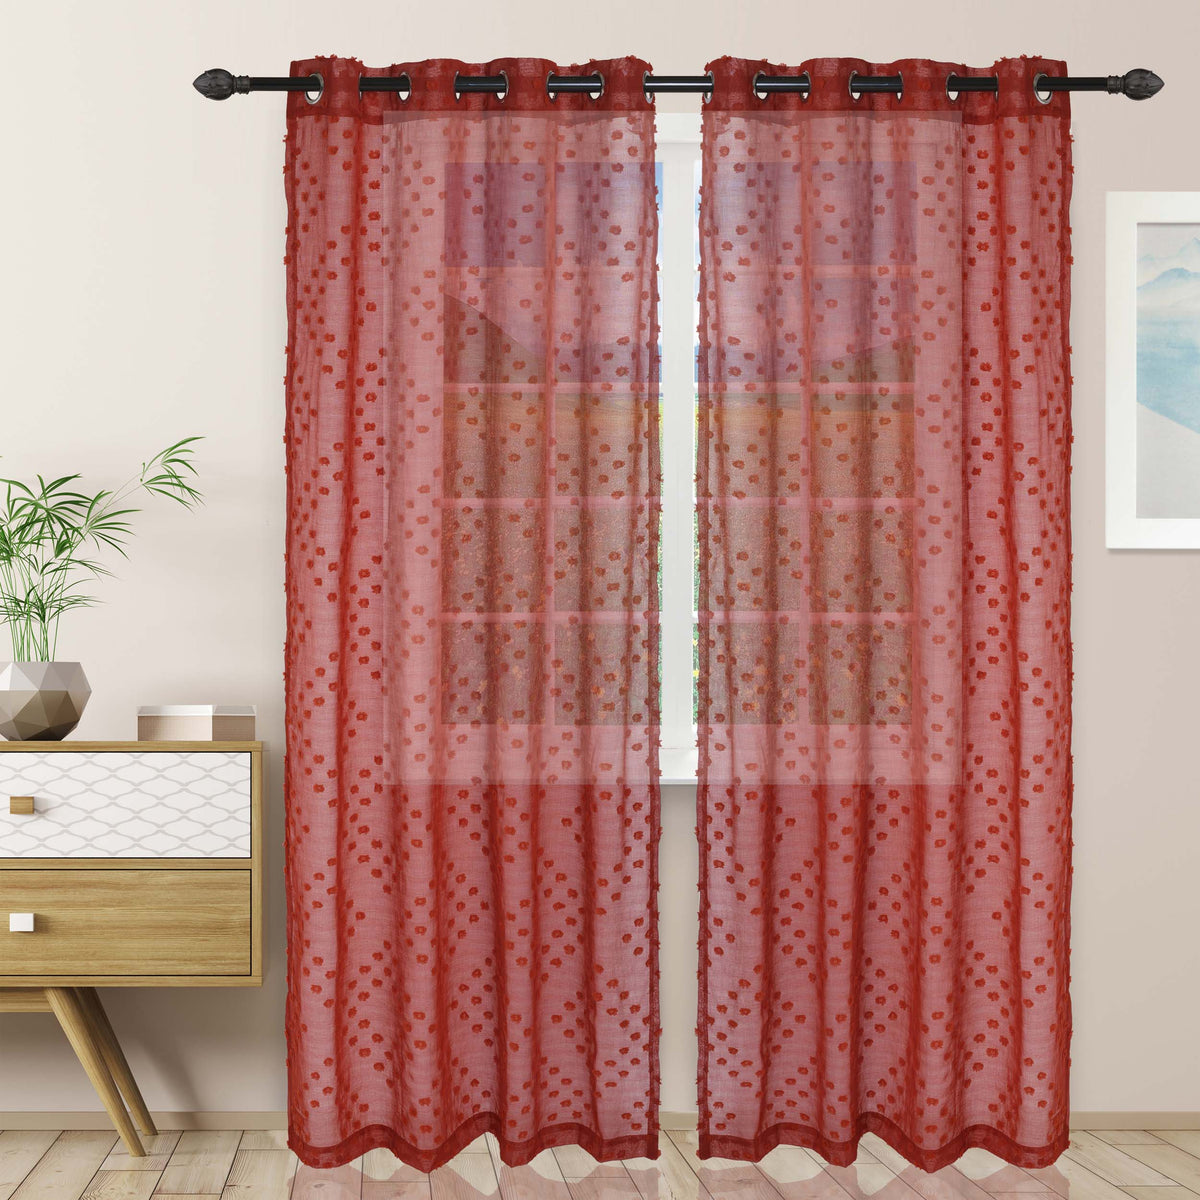 Sheer Poppy Floral Modern Textured Grommet Curtain Panels Set of 2 - Rust